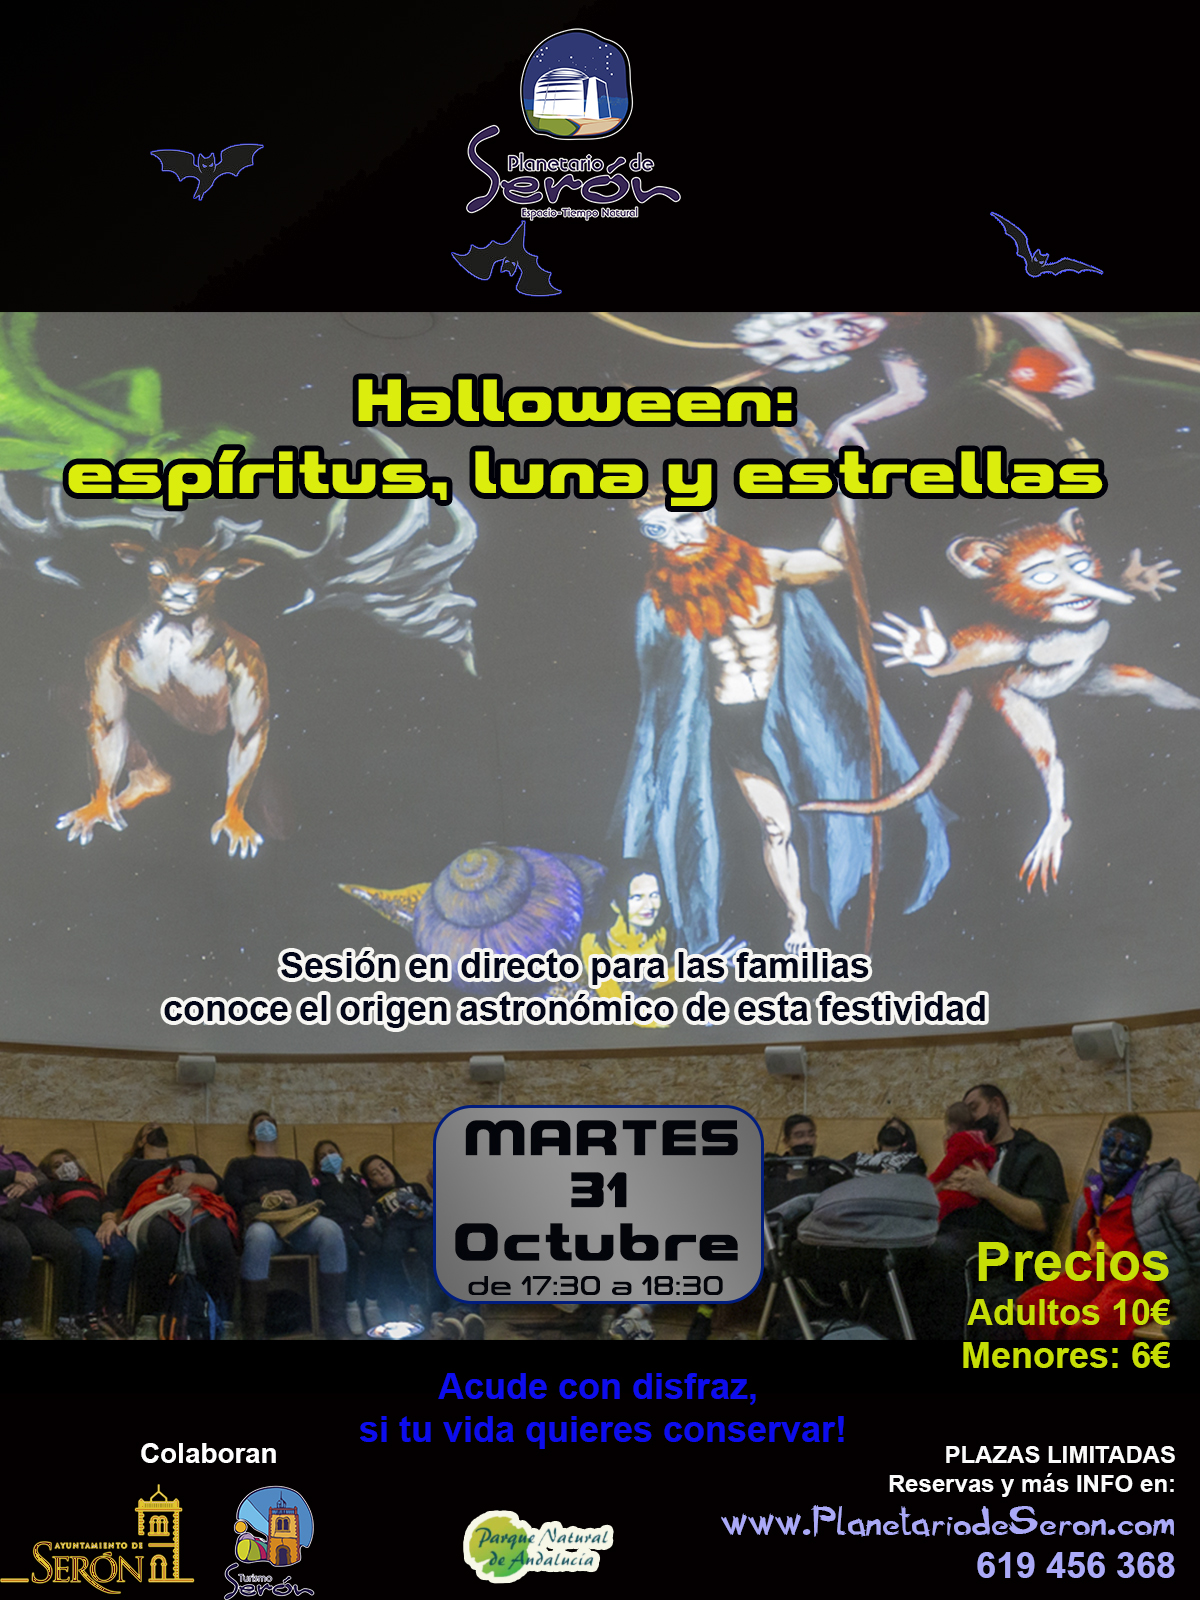 Especial Halloween Planetario de Seron